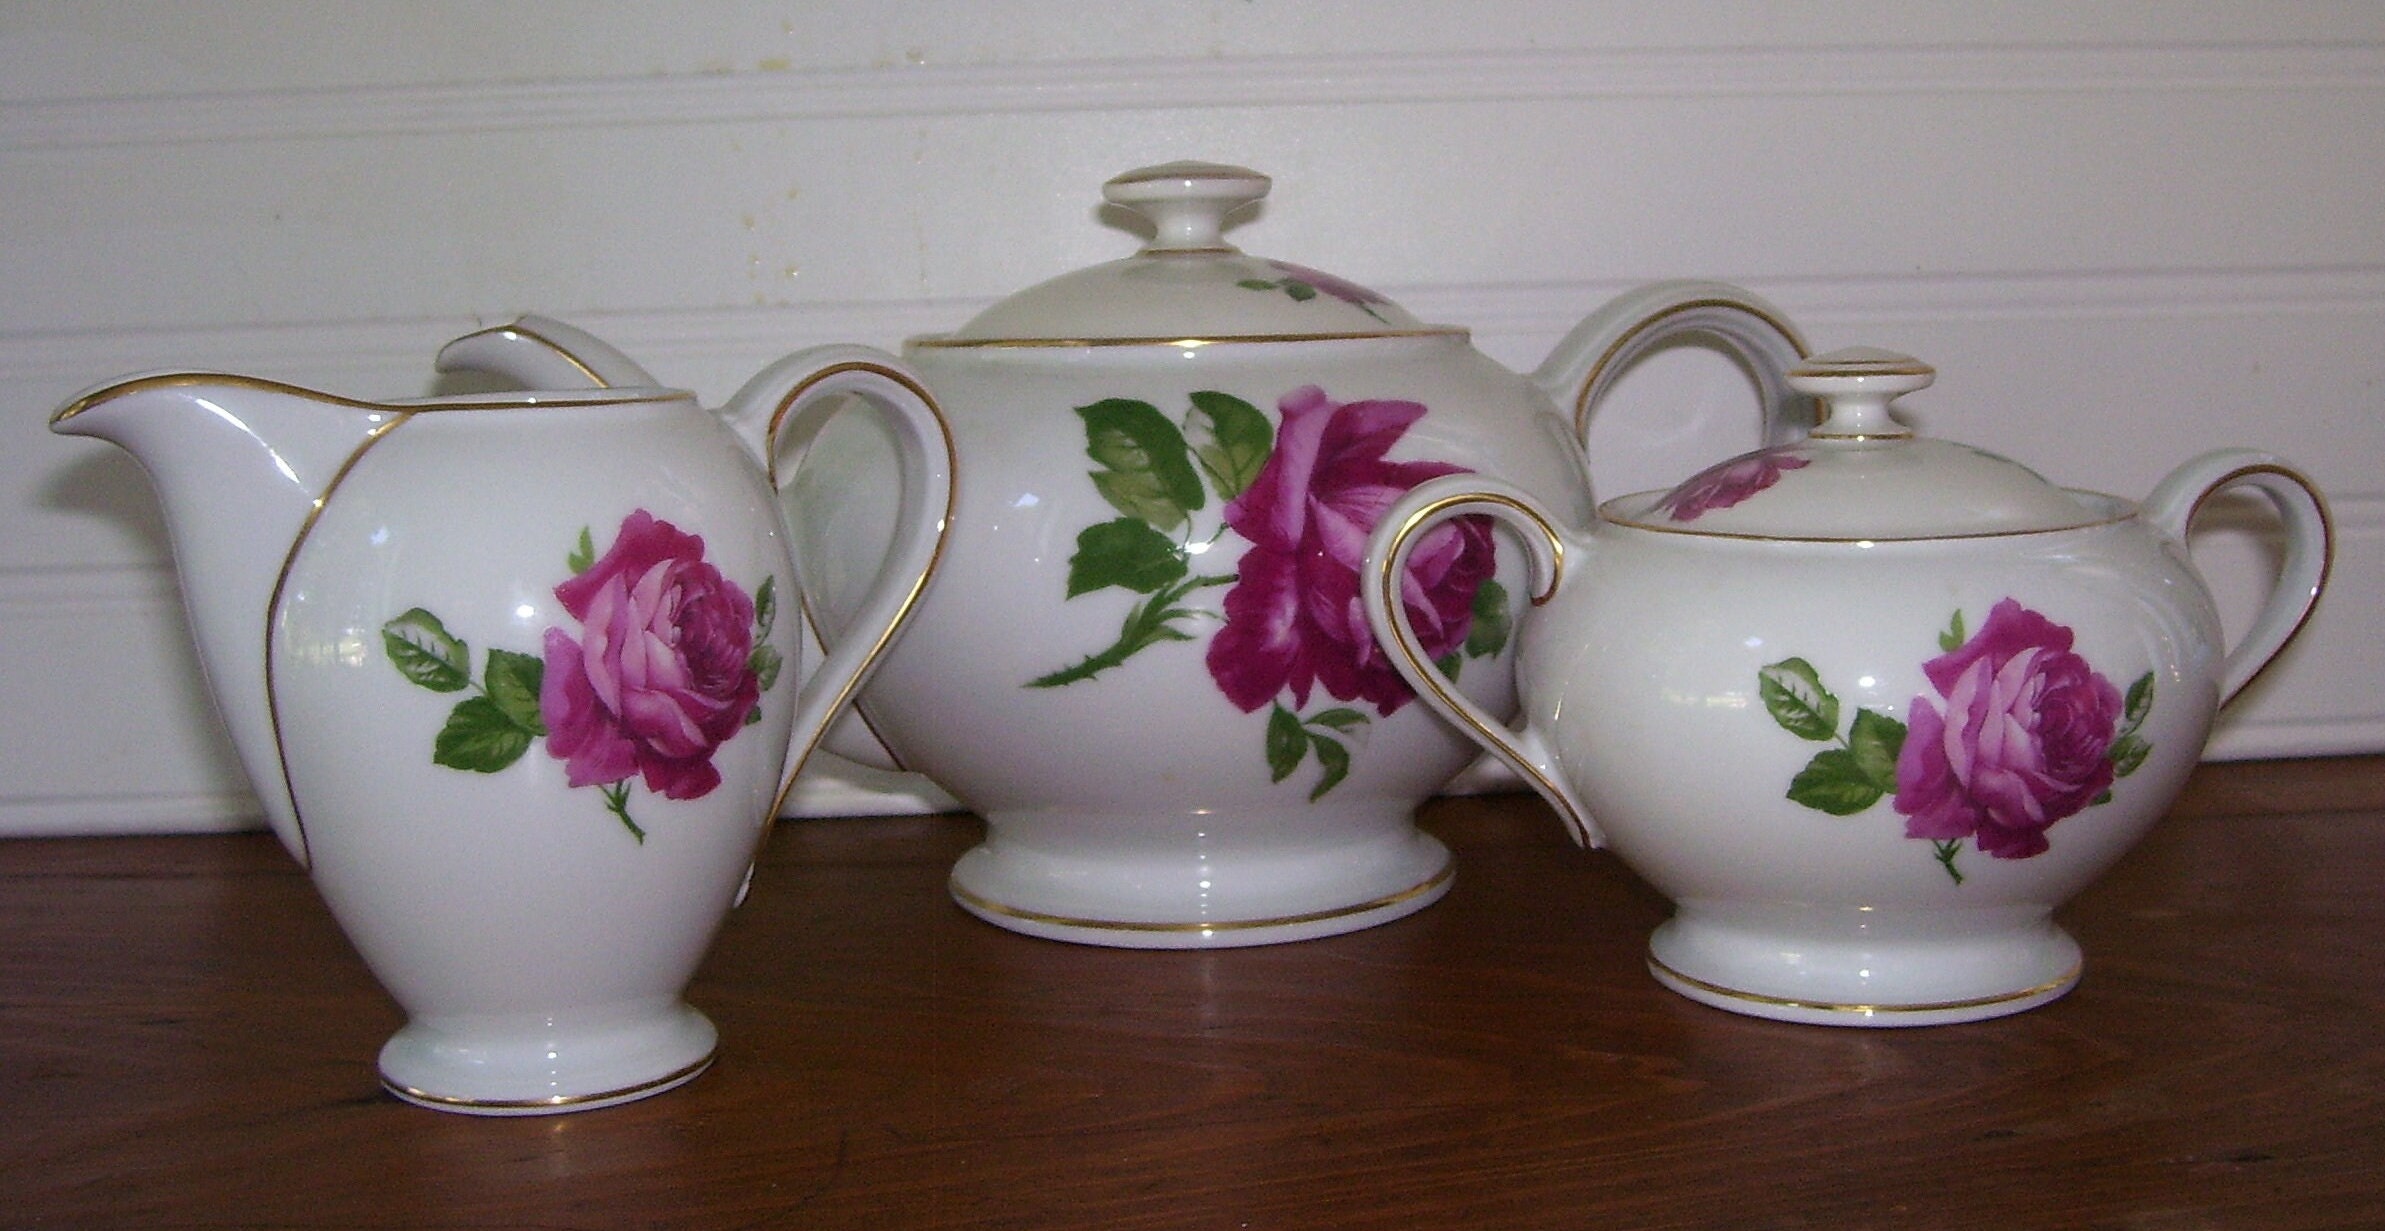 Red Rose Pattern Ivory Ceramic Vintage Tea Pot With Golden Leaves Edge,29oz,Ladyrose Gifts Idea 